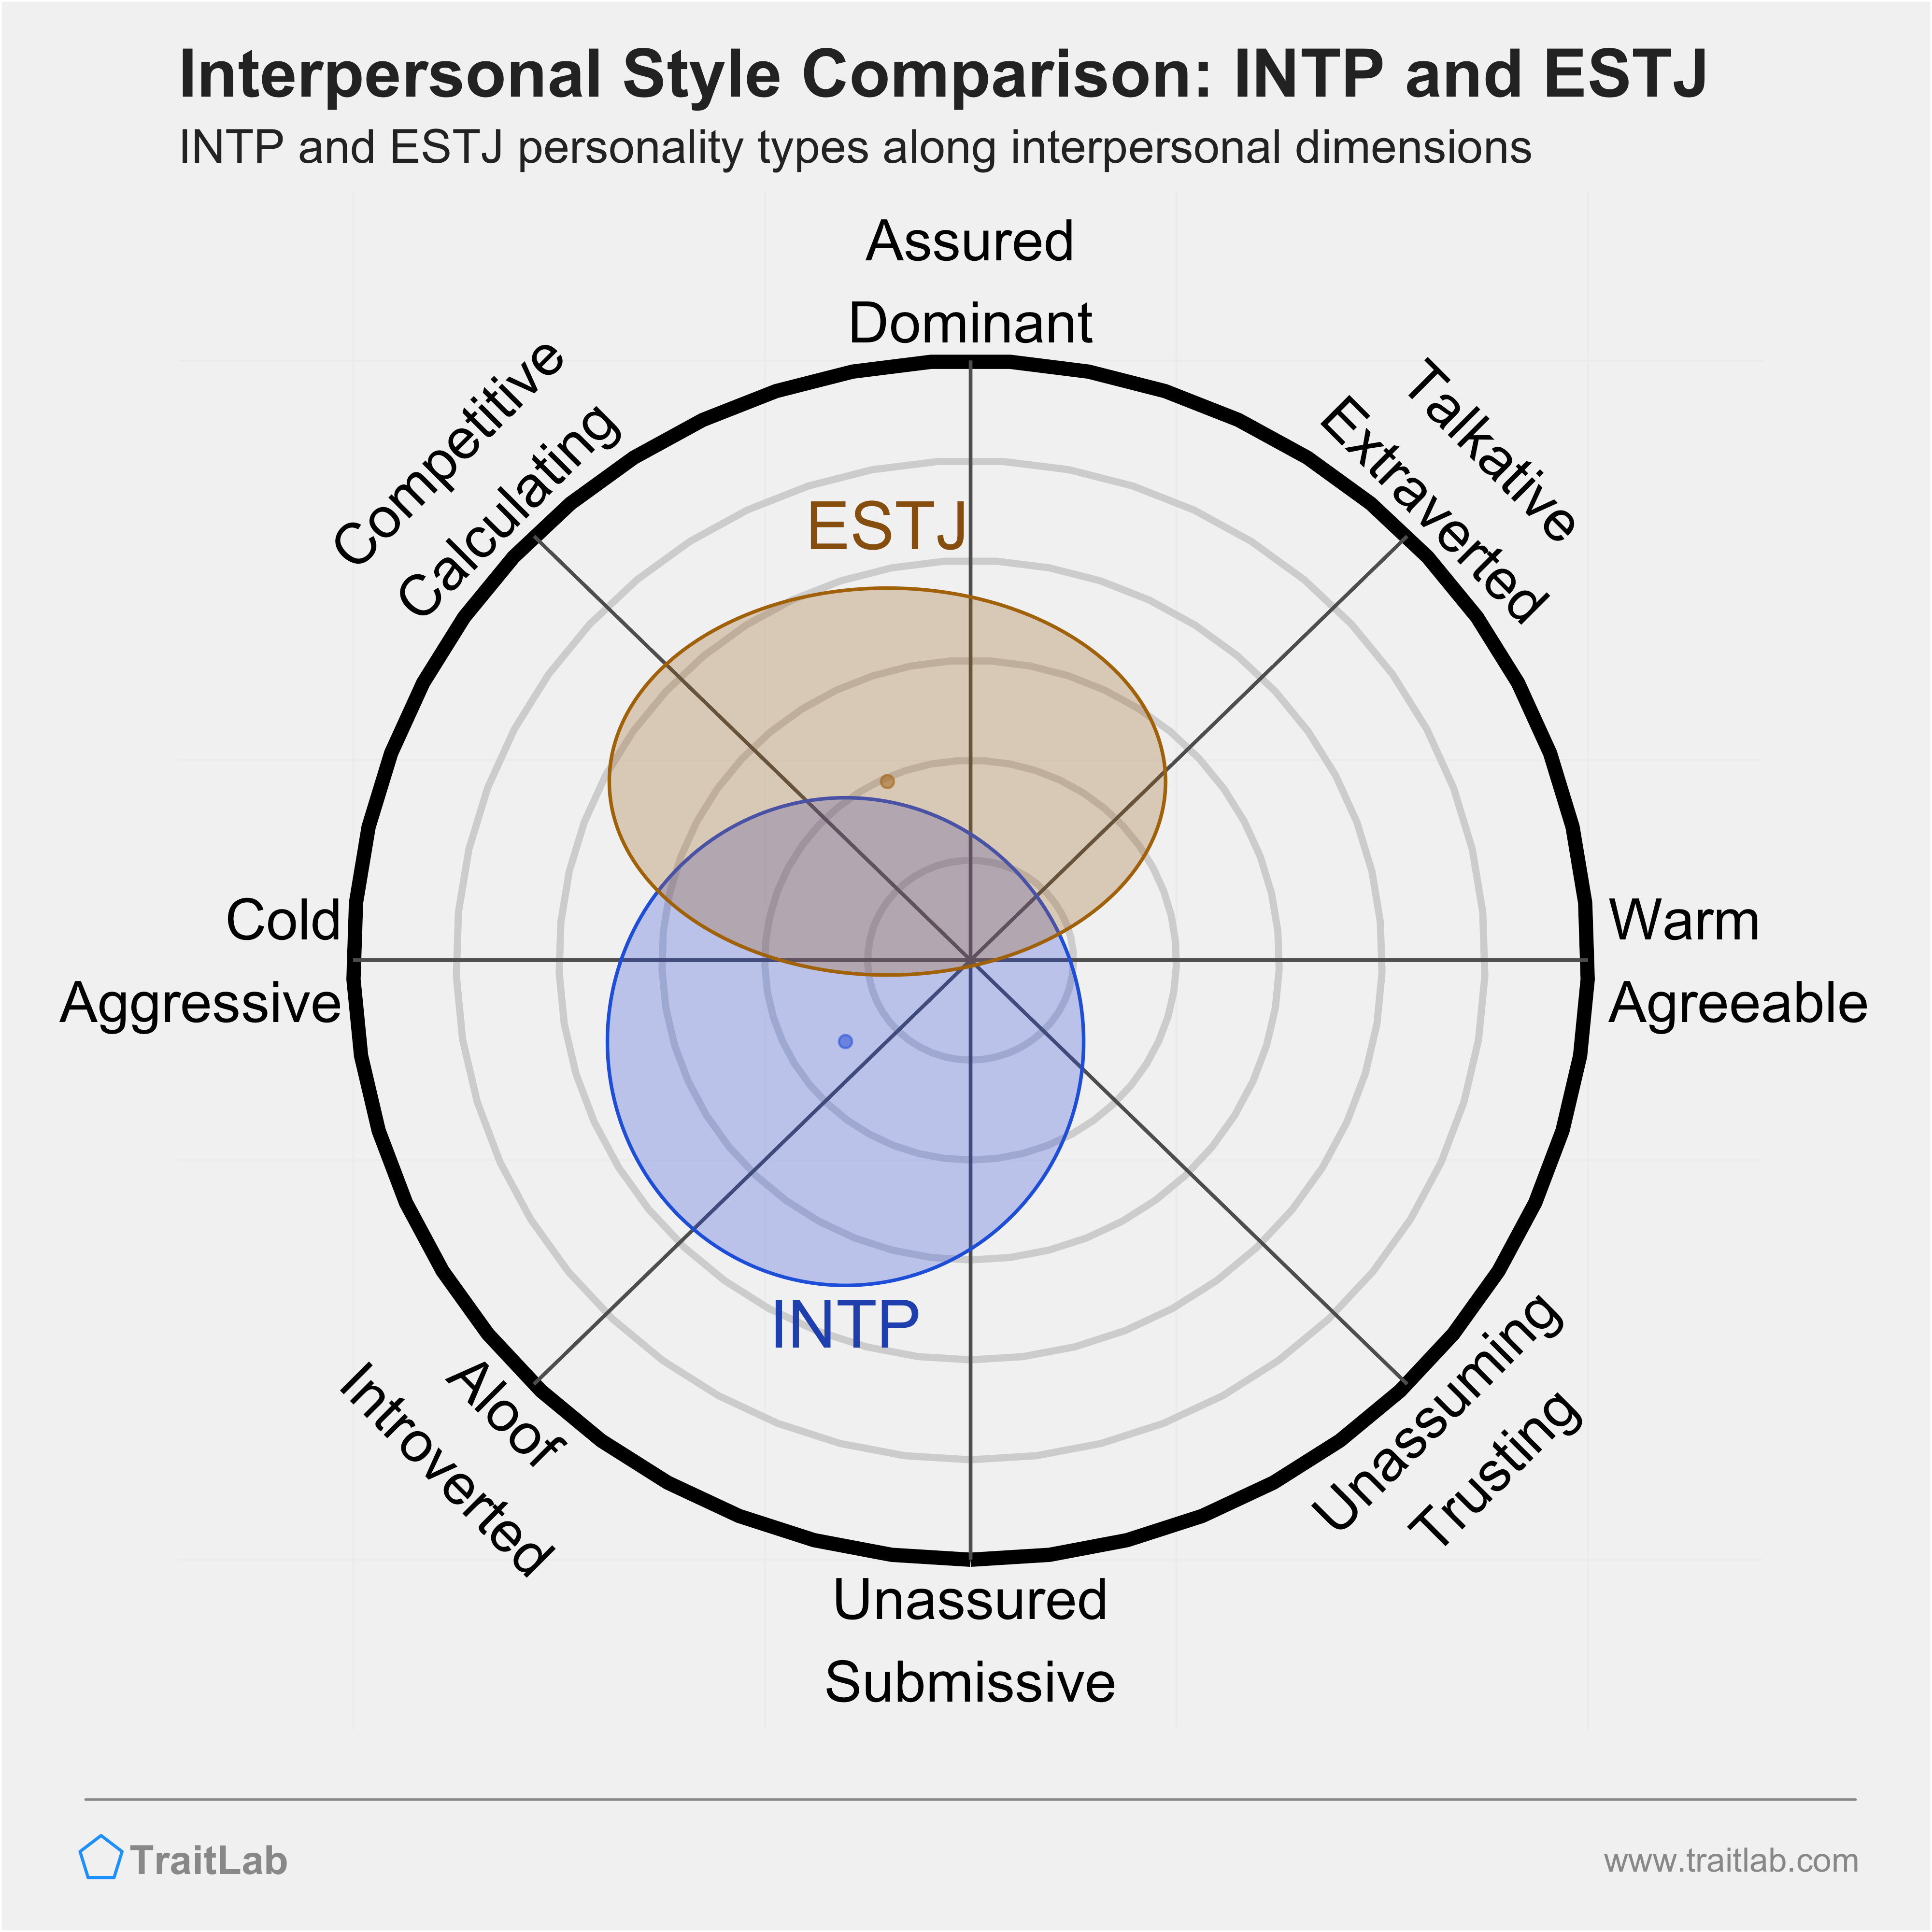 INTP and ESTJ comparison across interpersonal dimensions